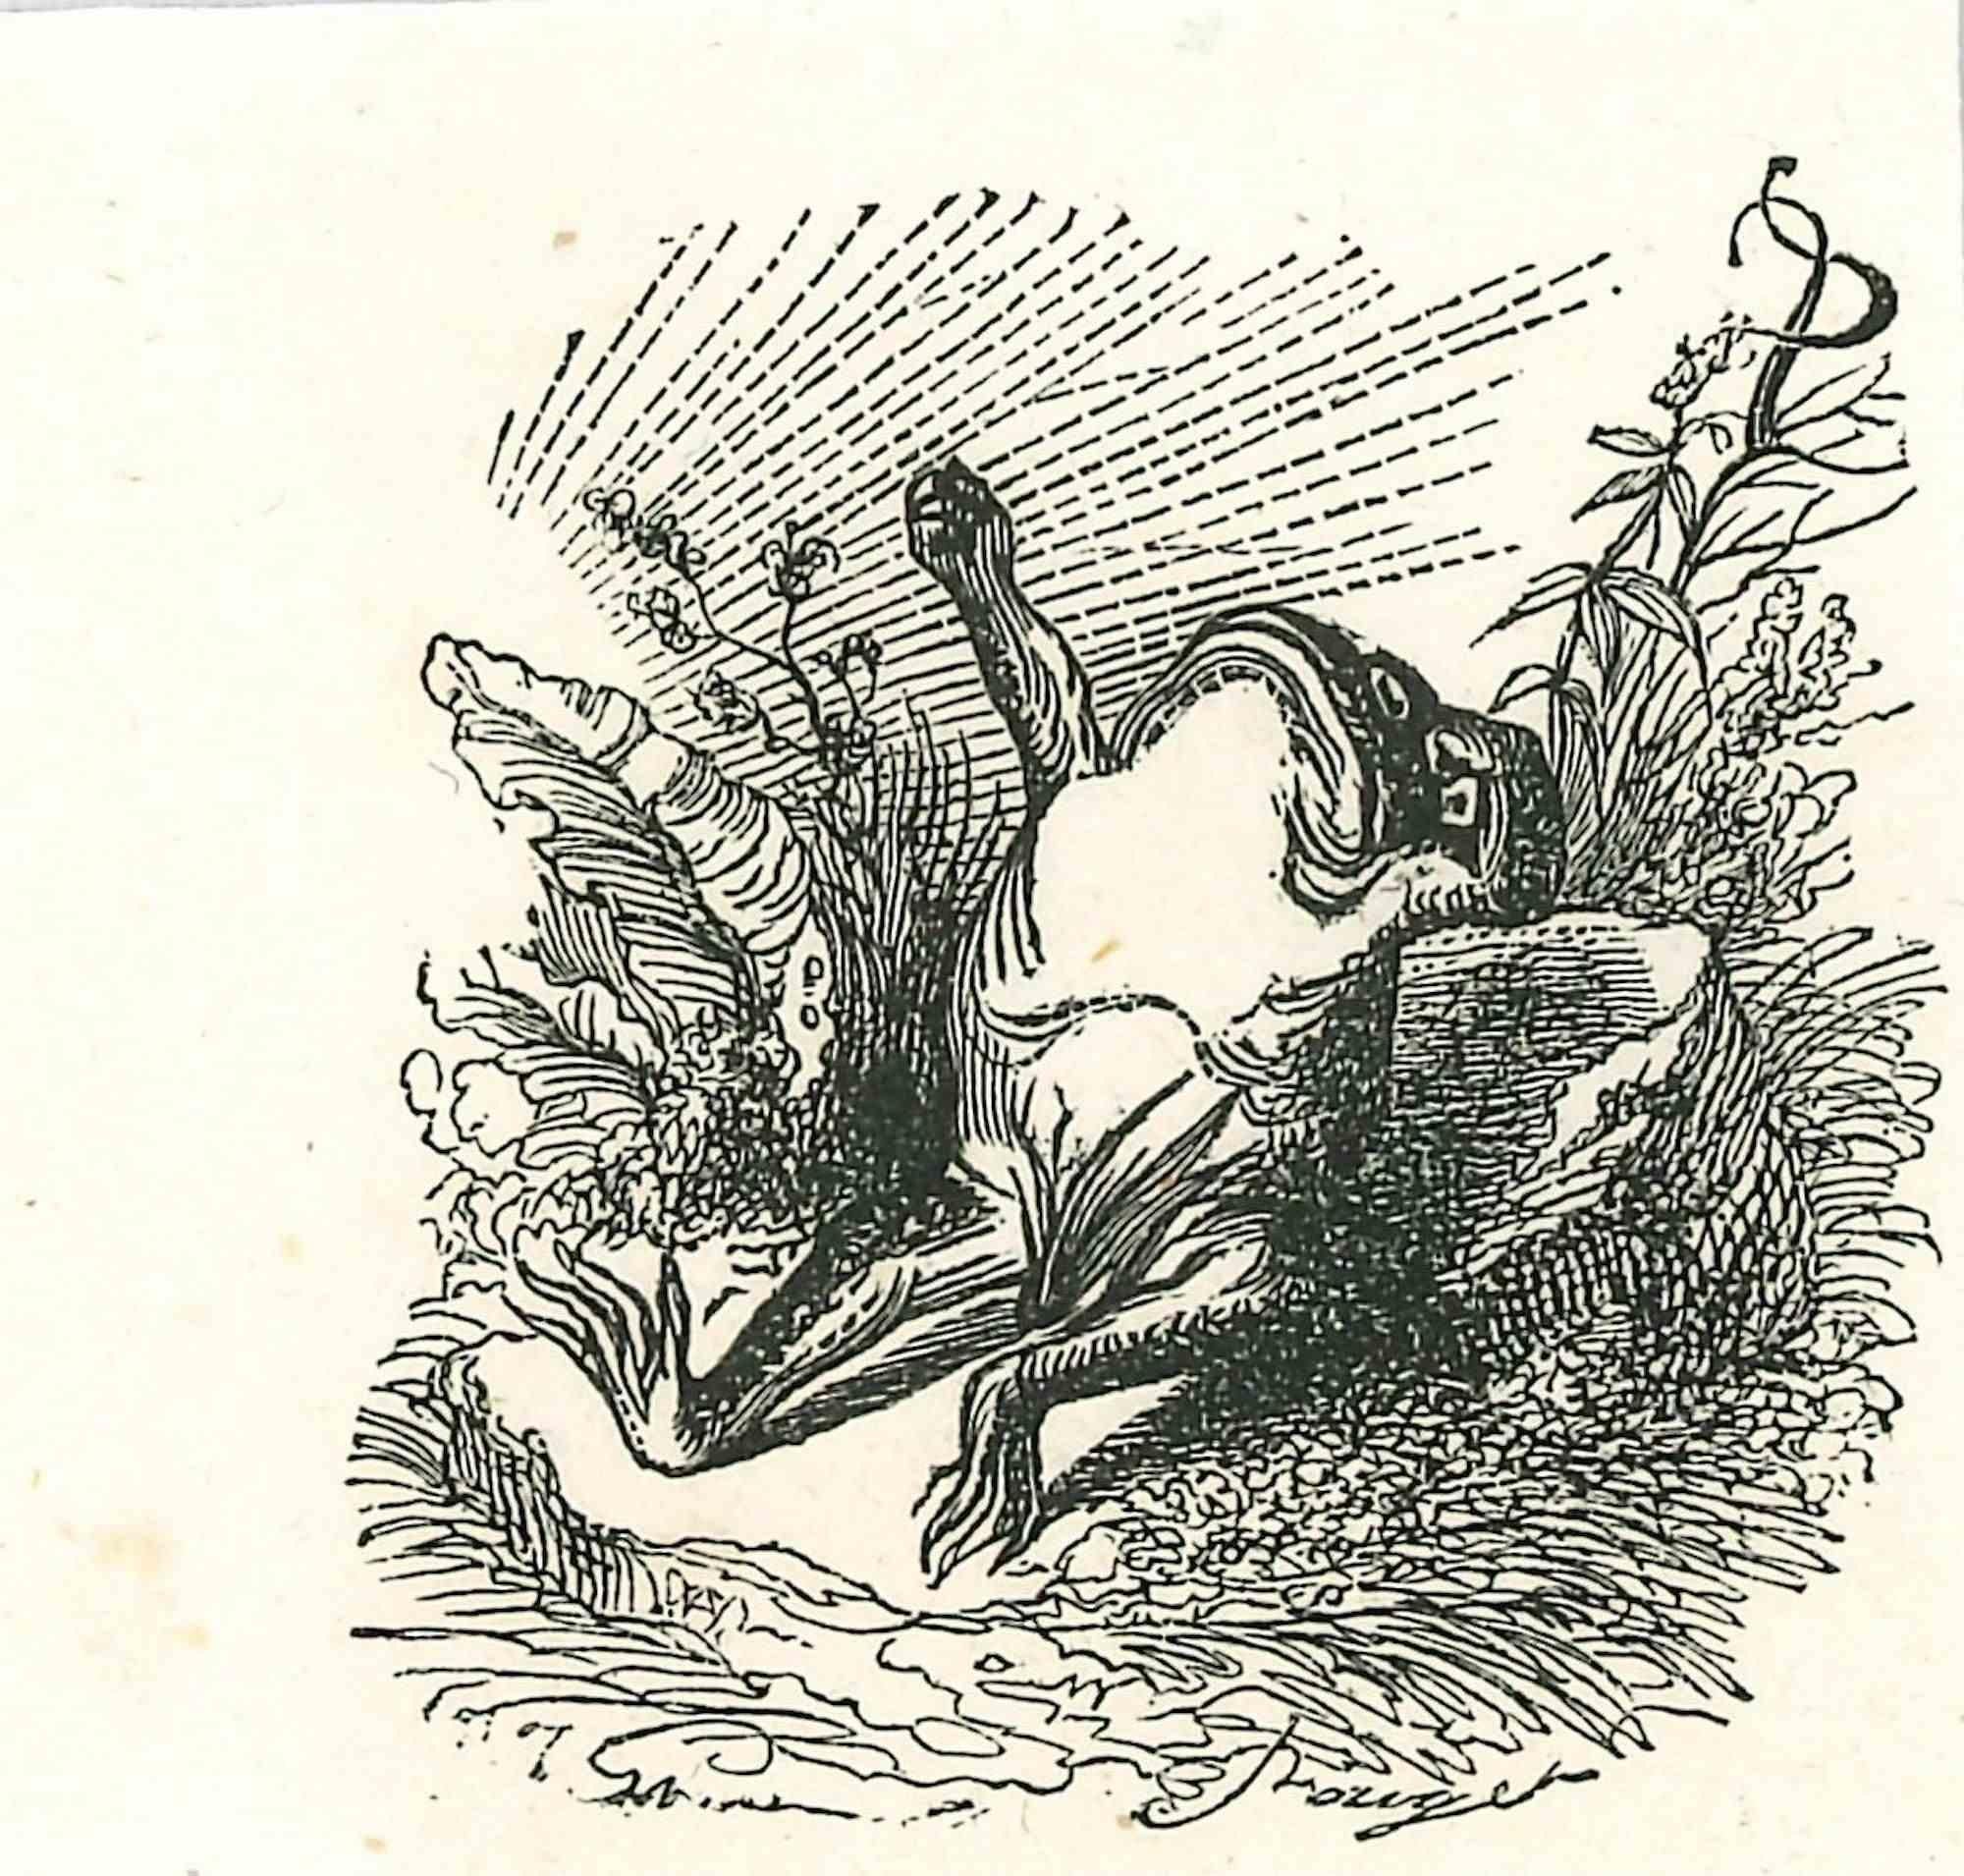 The Lazy Frog - Original Lithograph by J.J Grandville - 1852